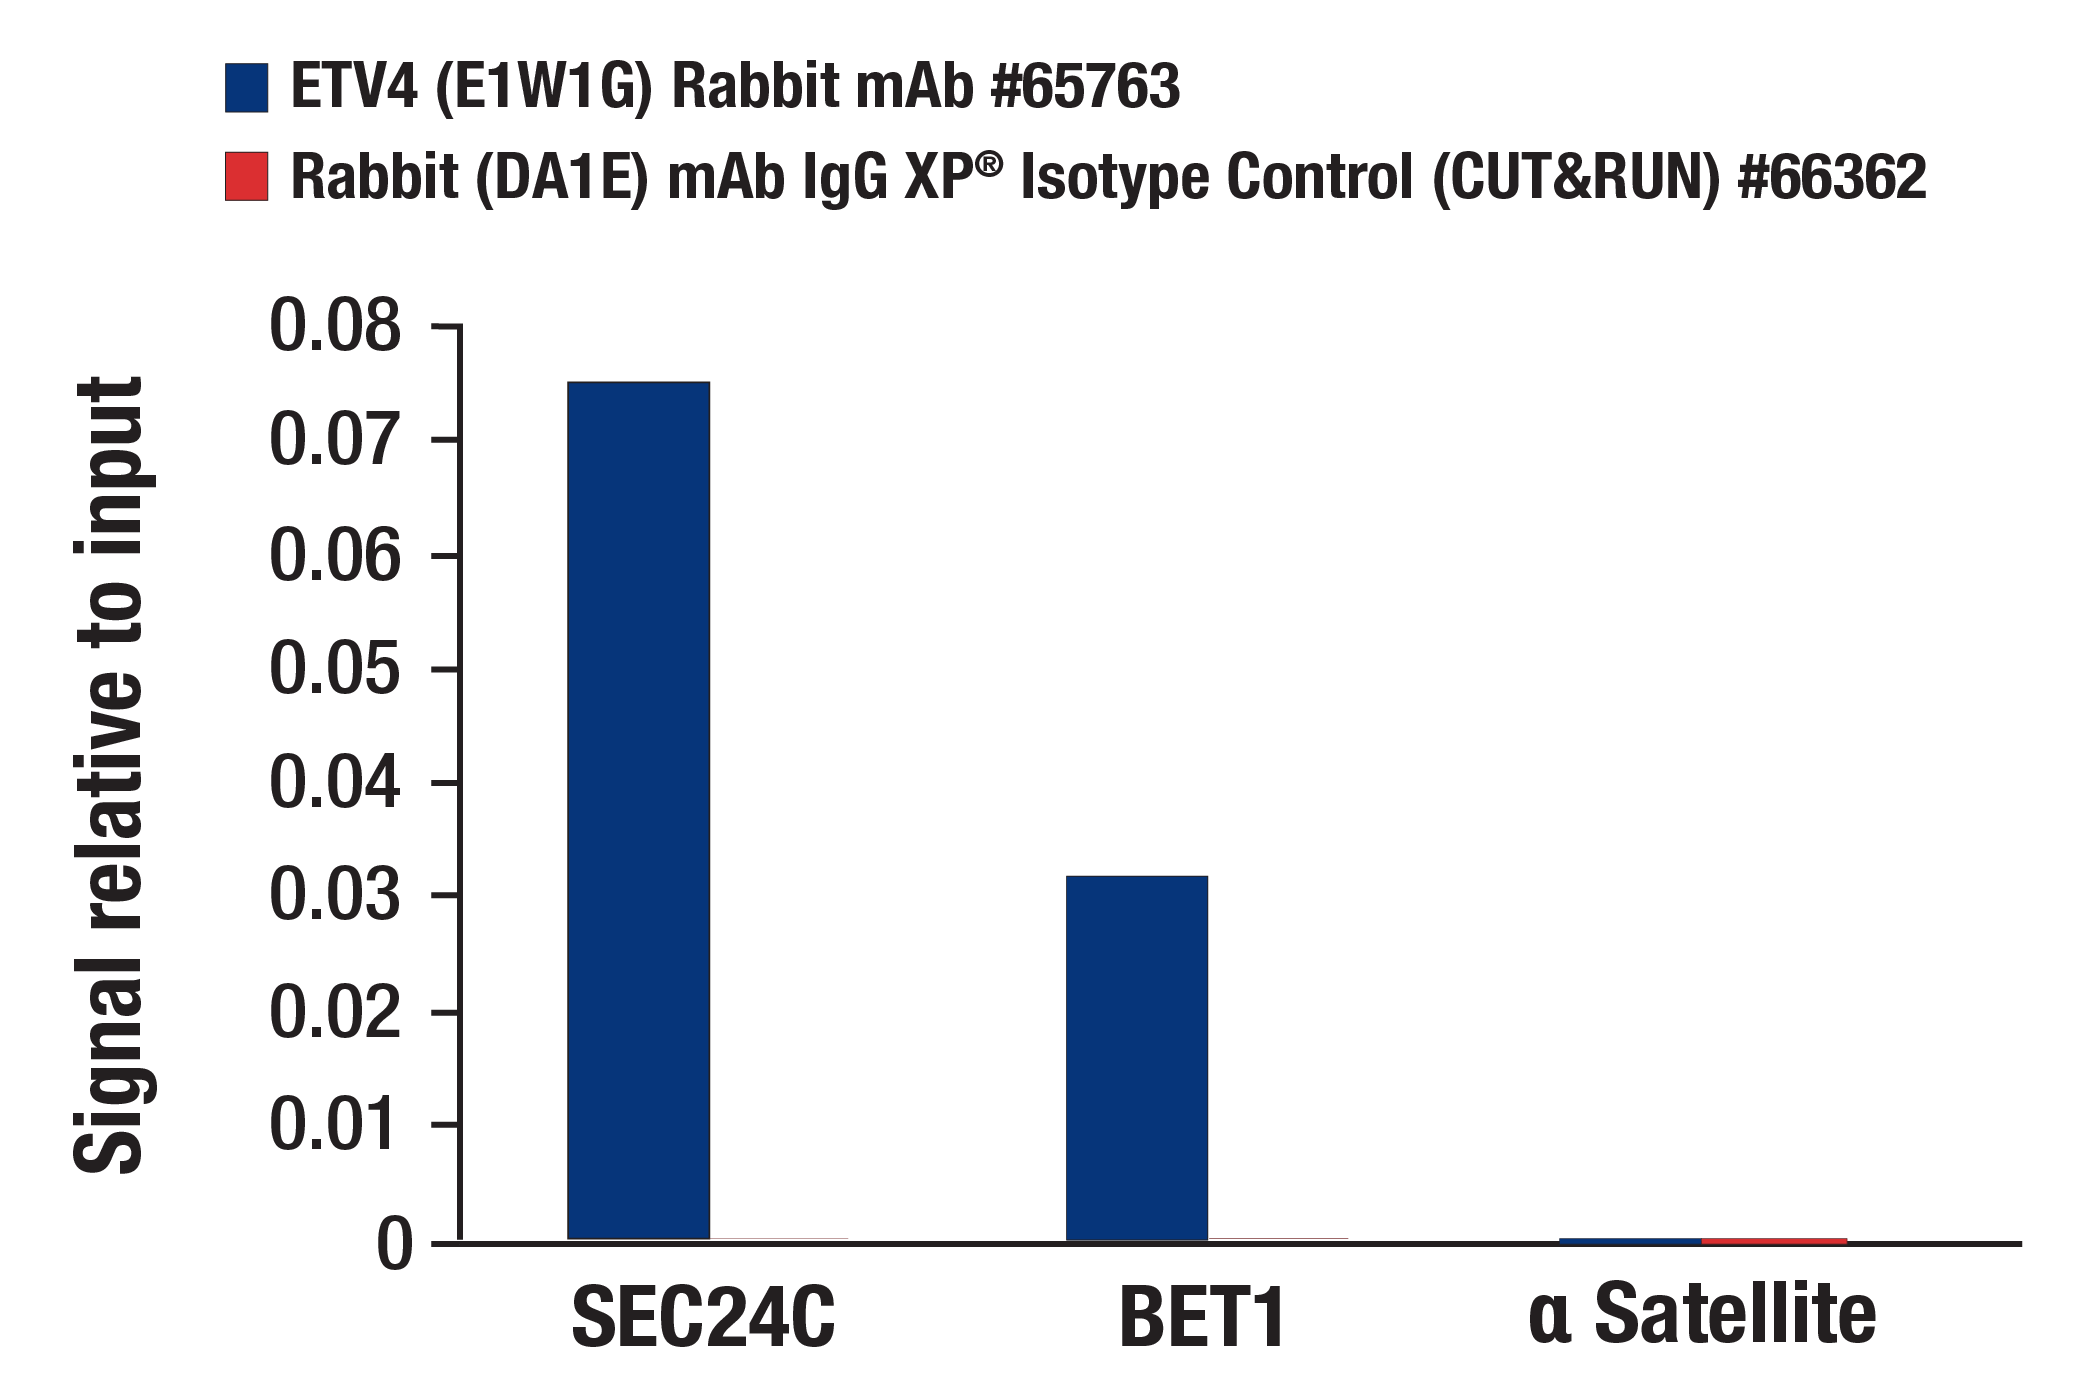 CUT and RUN Image 3: ETV4 (E1W1G) Rabbit mAb